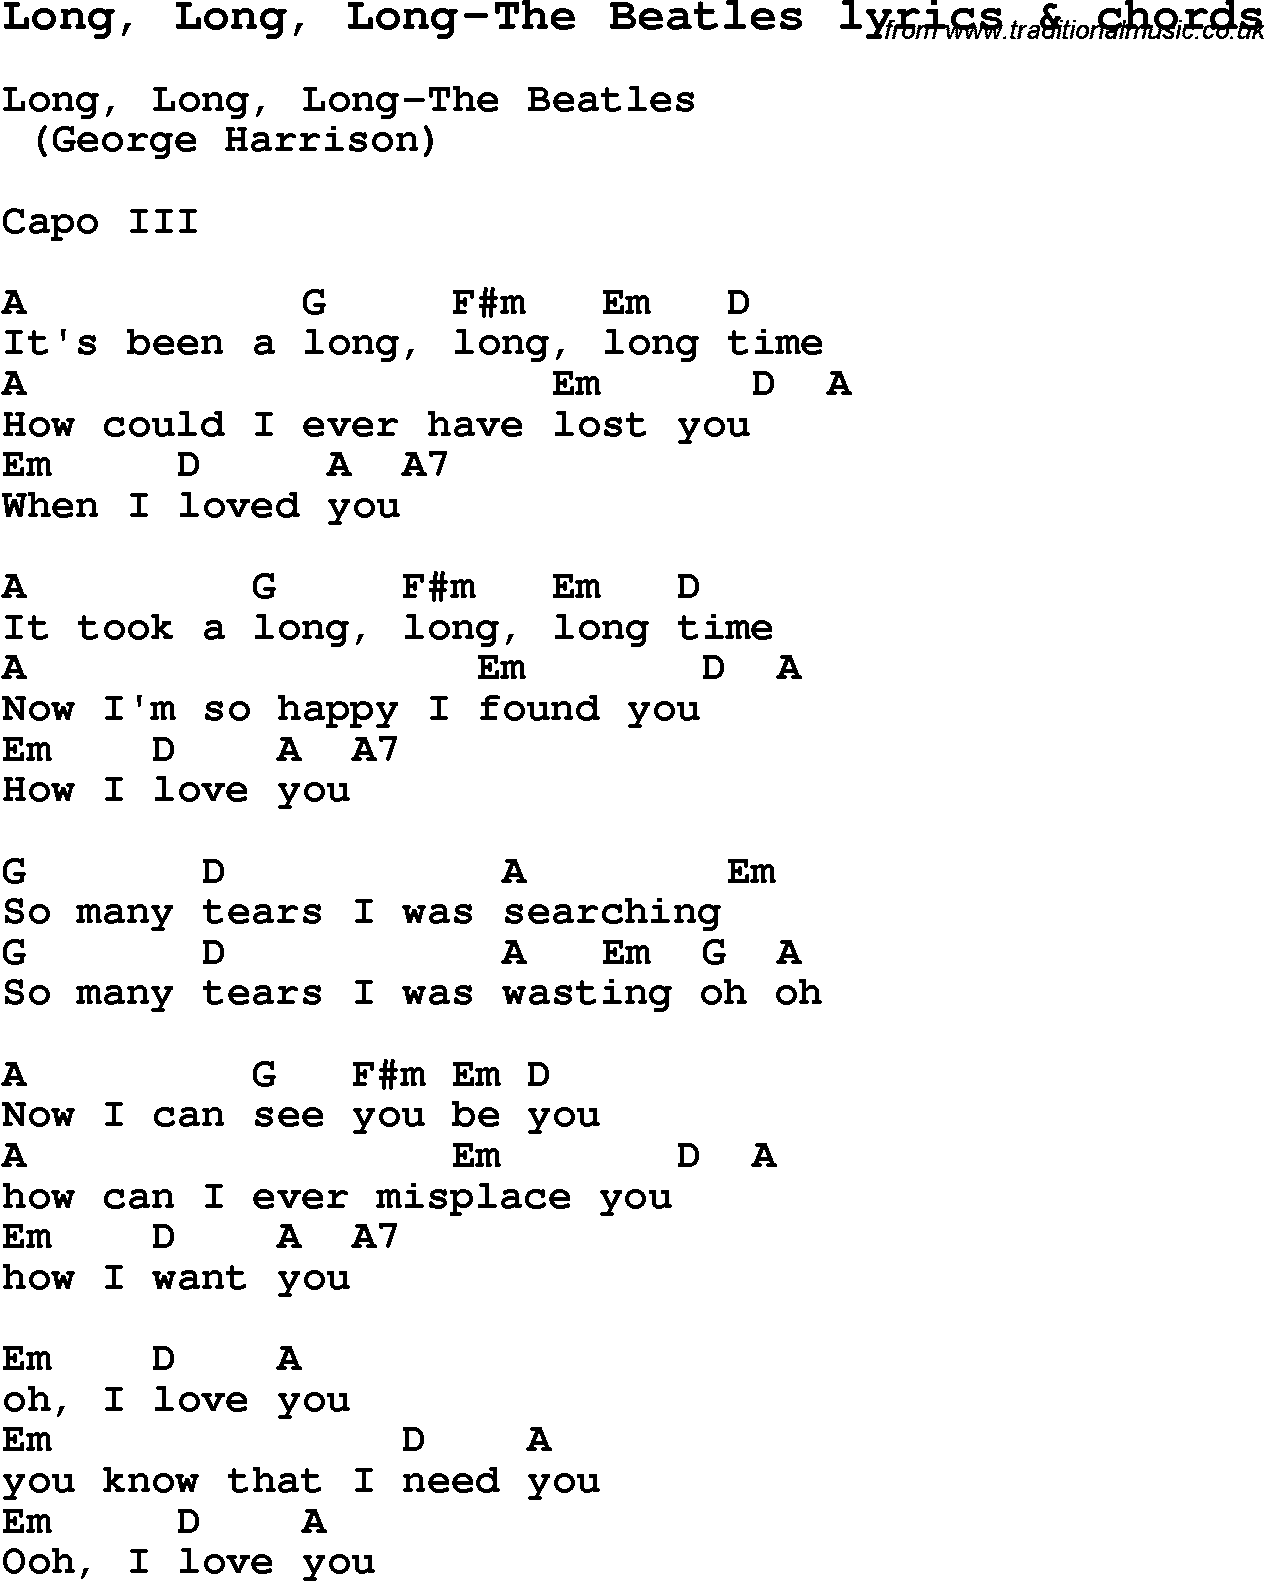 Love Song Lyrics for: Long, Long, Long-The Beatles with chords for Ukulele, Guitar Banjo etc.